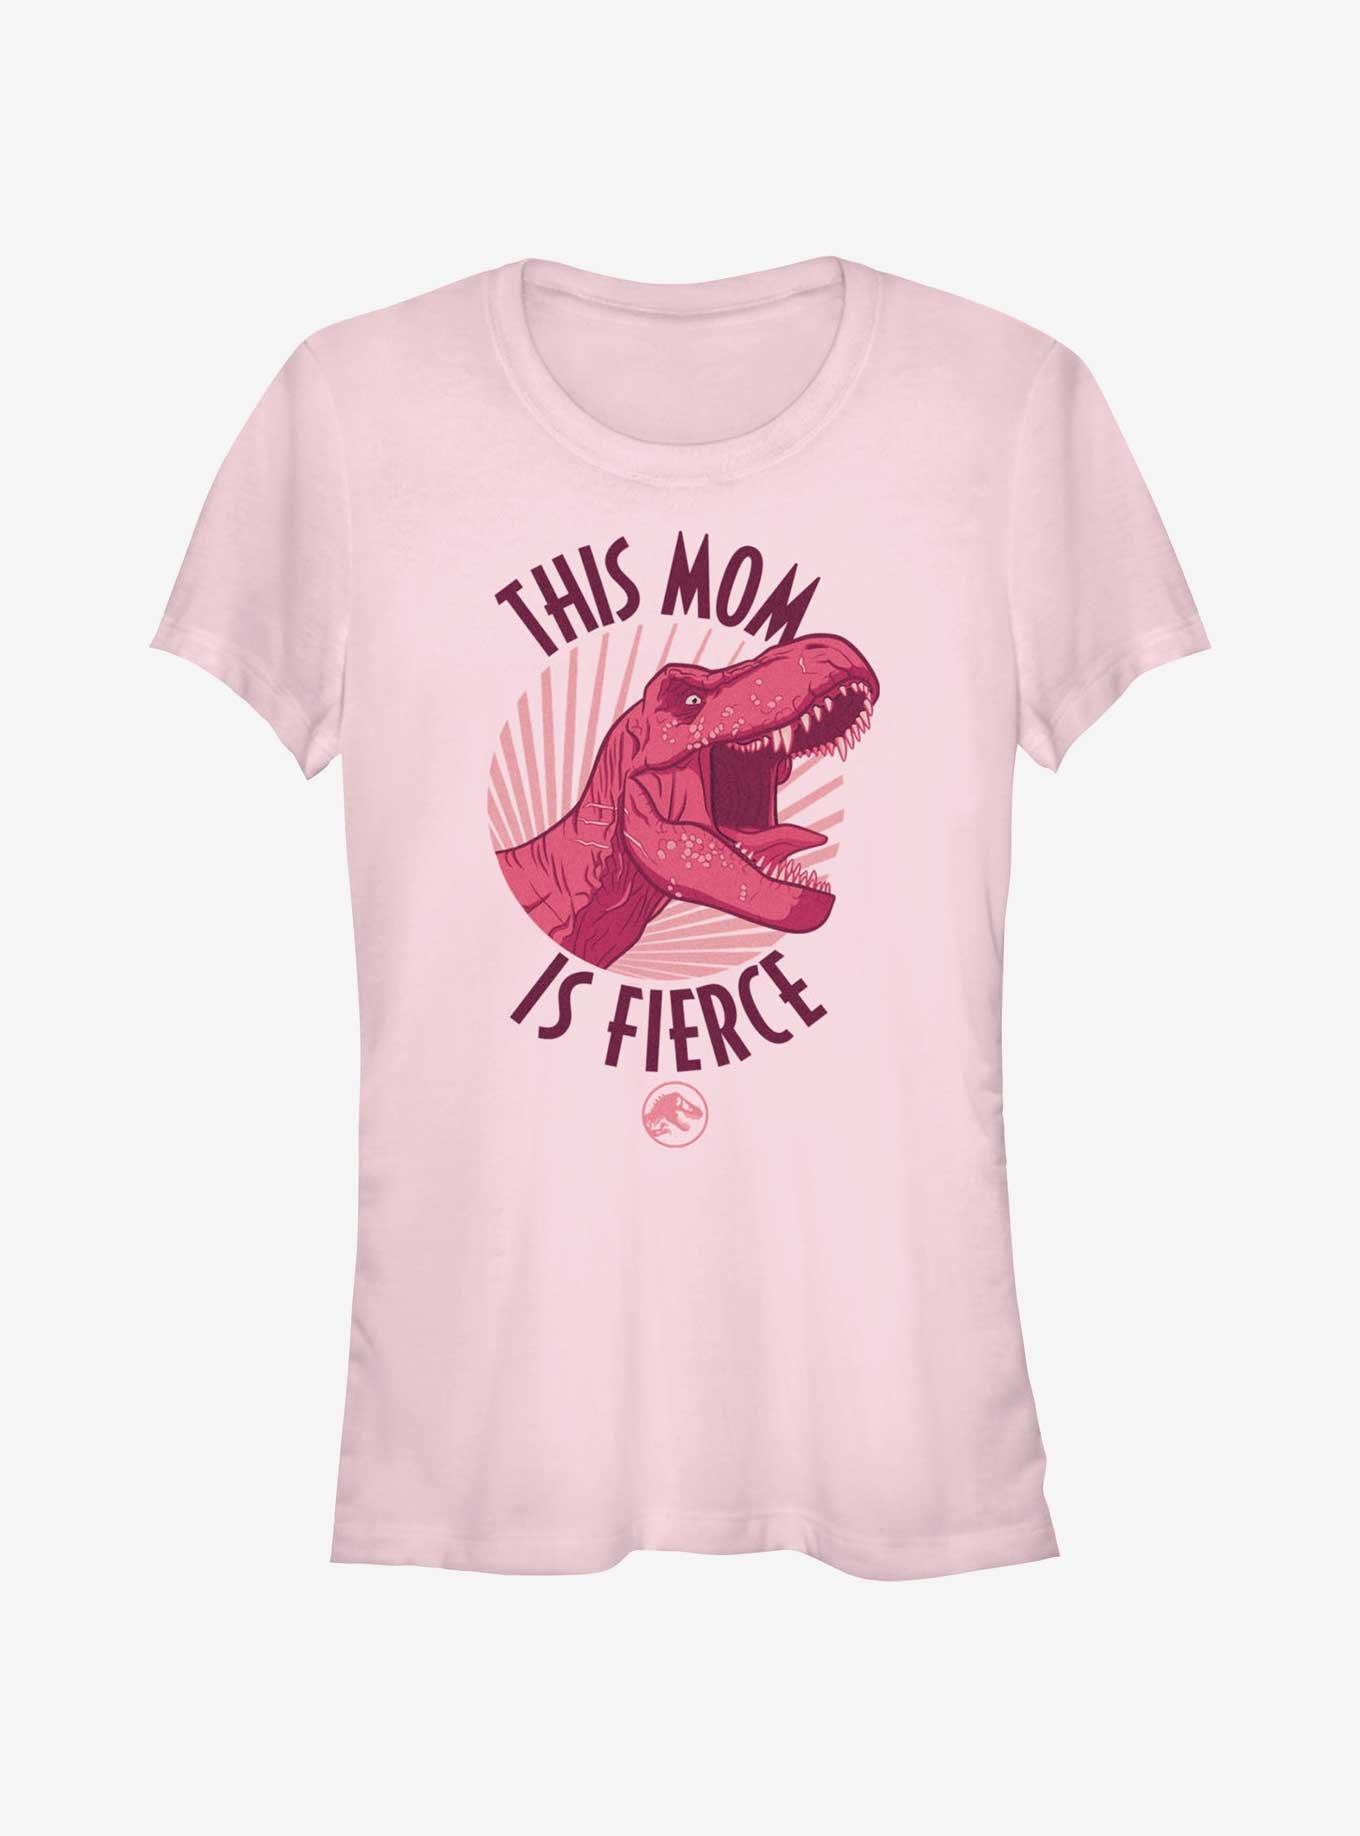 Jurassic Park This Mom Is Fierce Girls T-Shirt, LIGHT PINK, hi-res